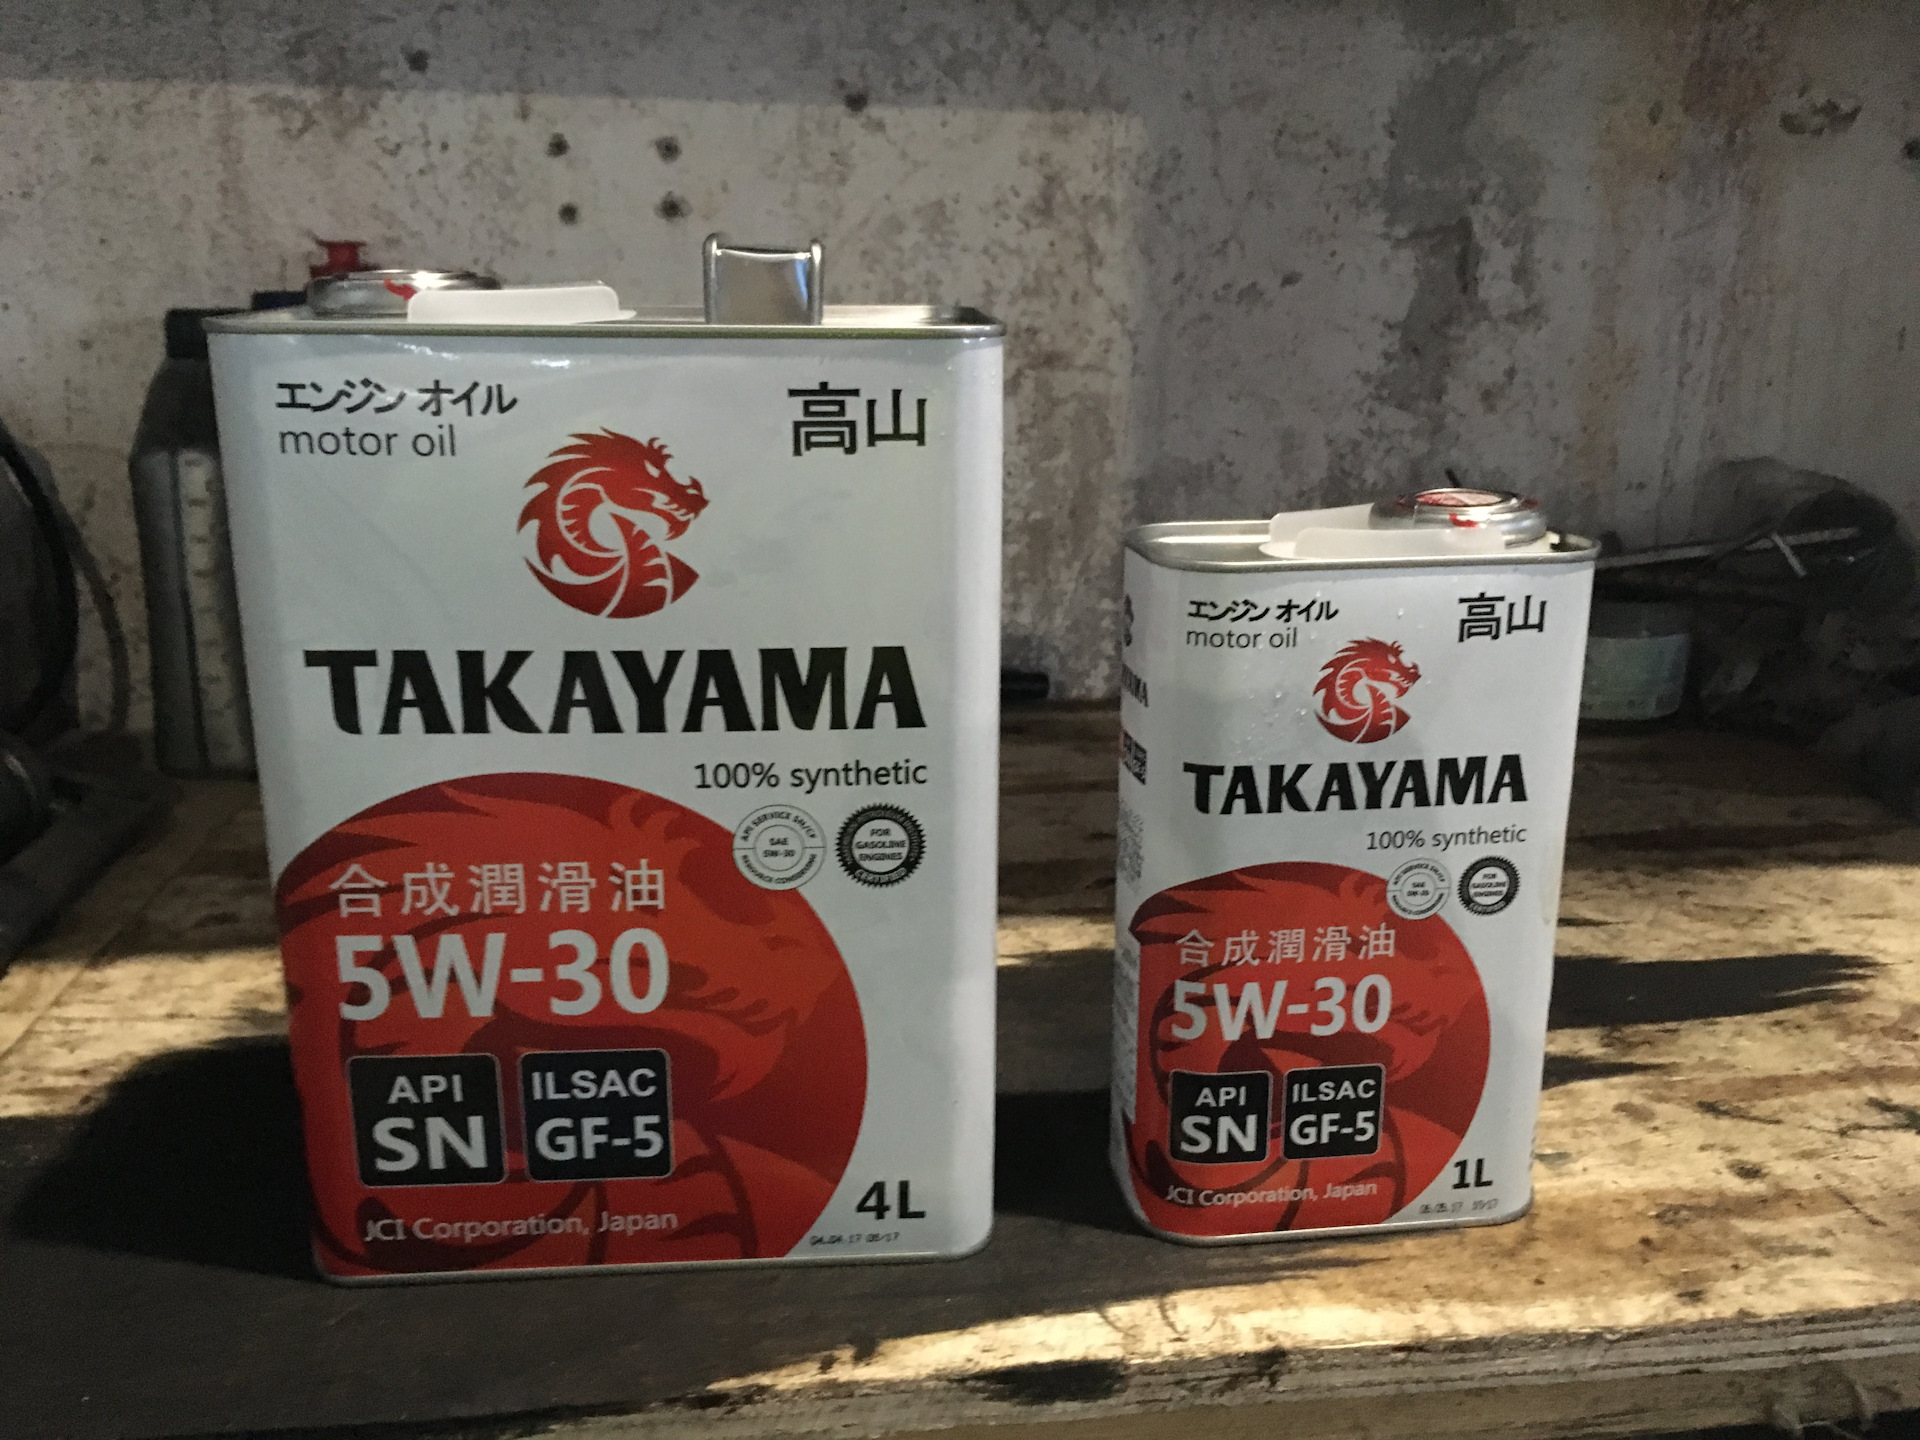 Масло такаяма 5w30 купить. Такаяма 5w30. Масло моторное Takayama 5w30. Японское моторное масло Takayama 5w30. Takayama 5w30 SN gf-5.